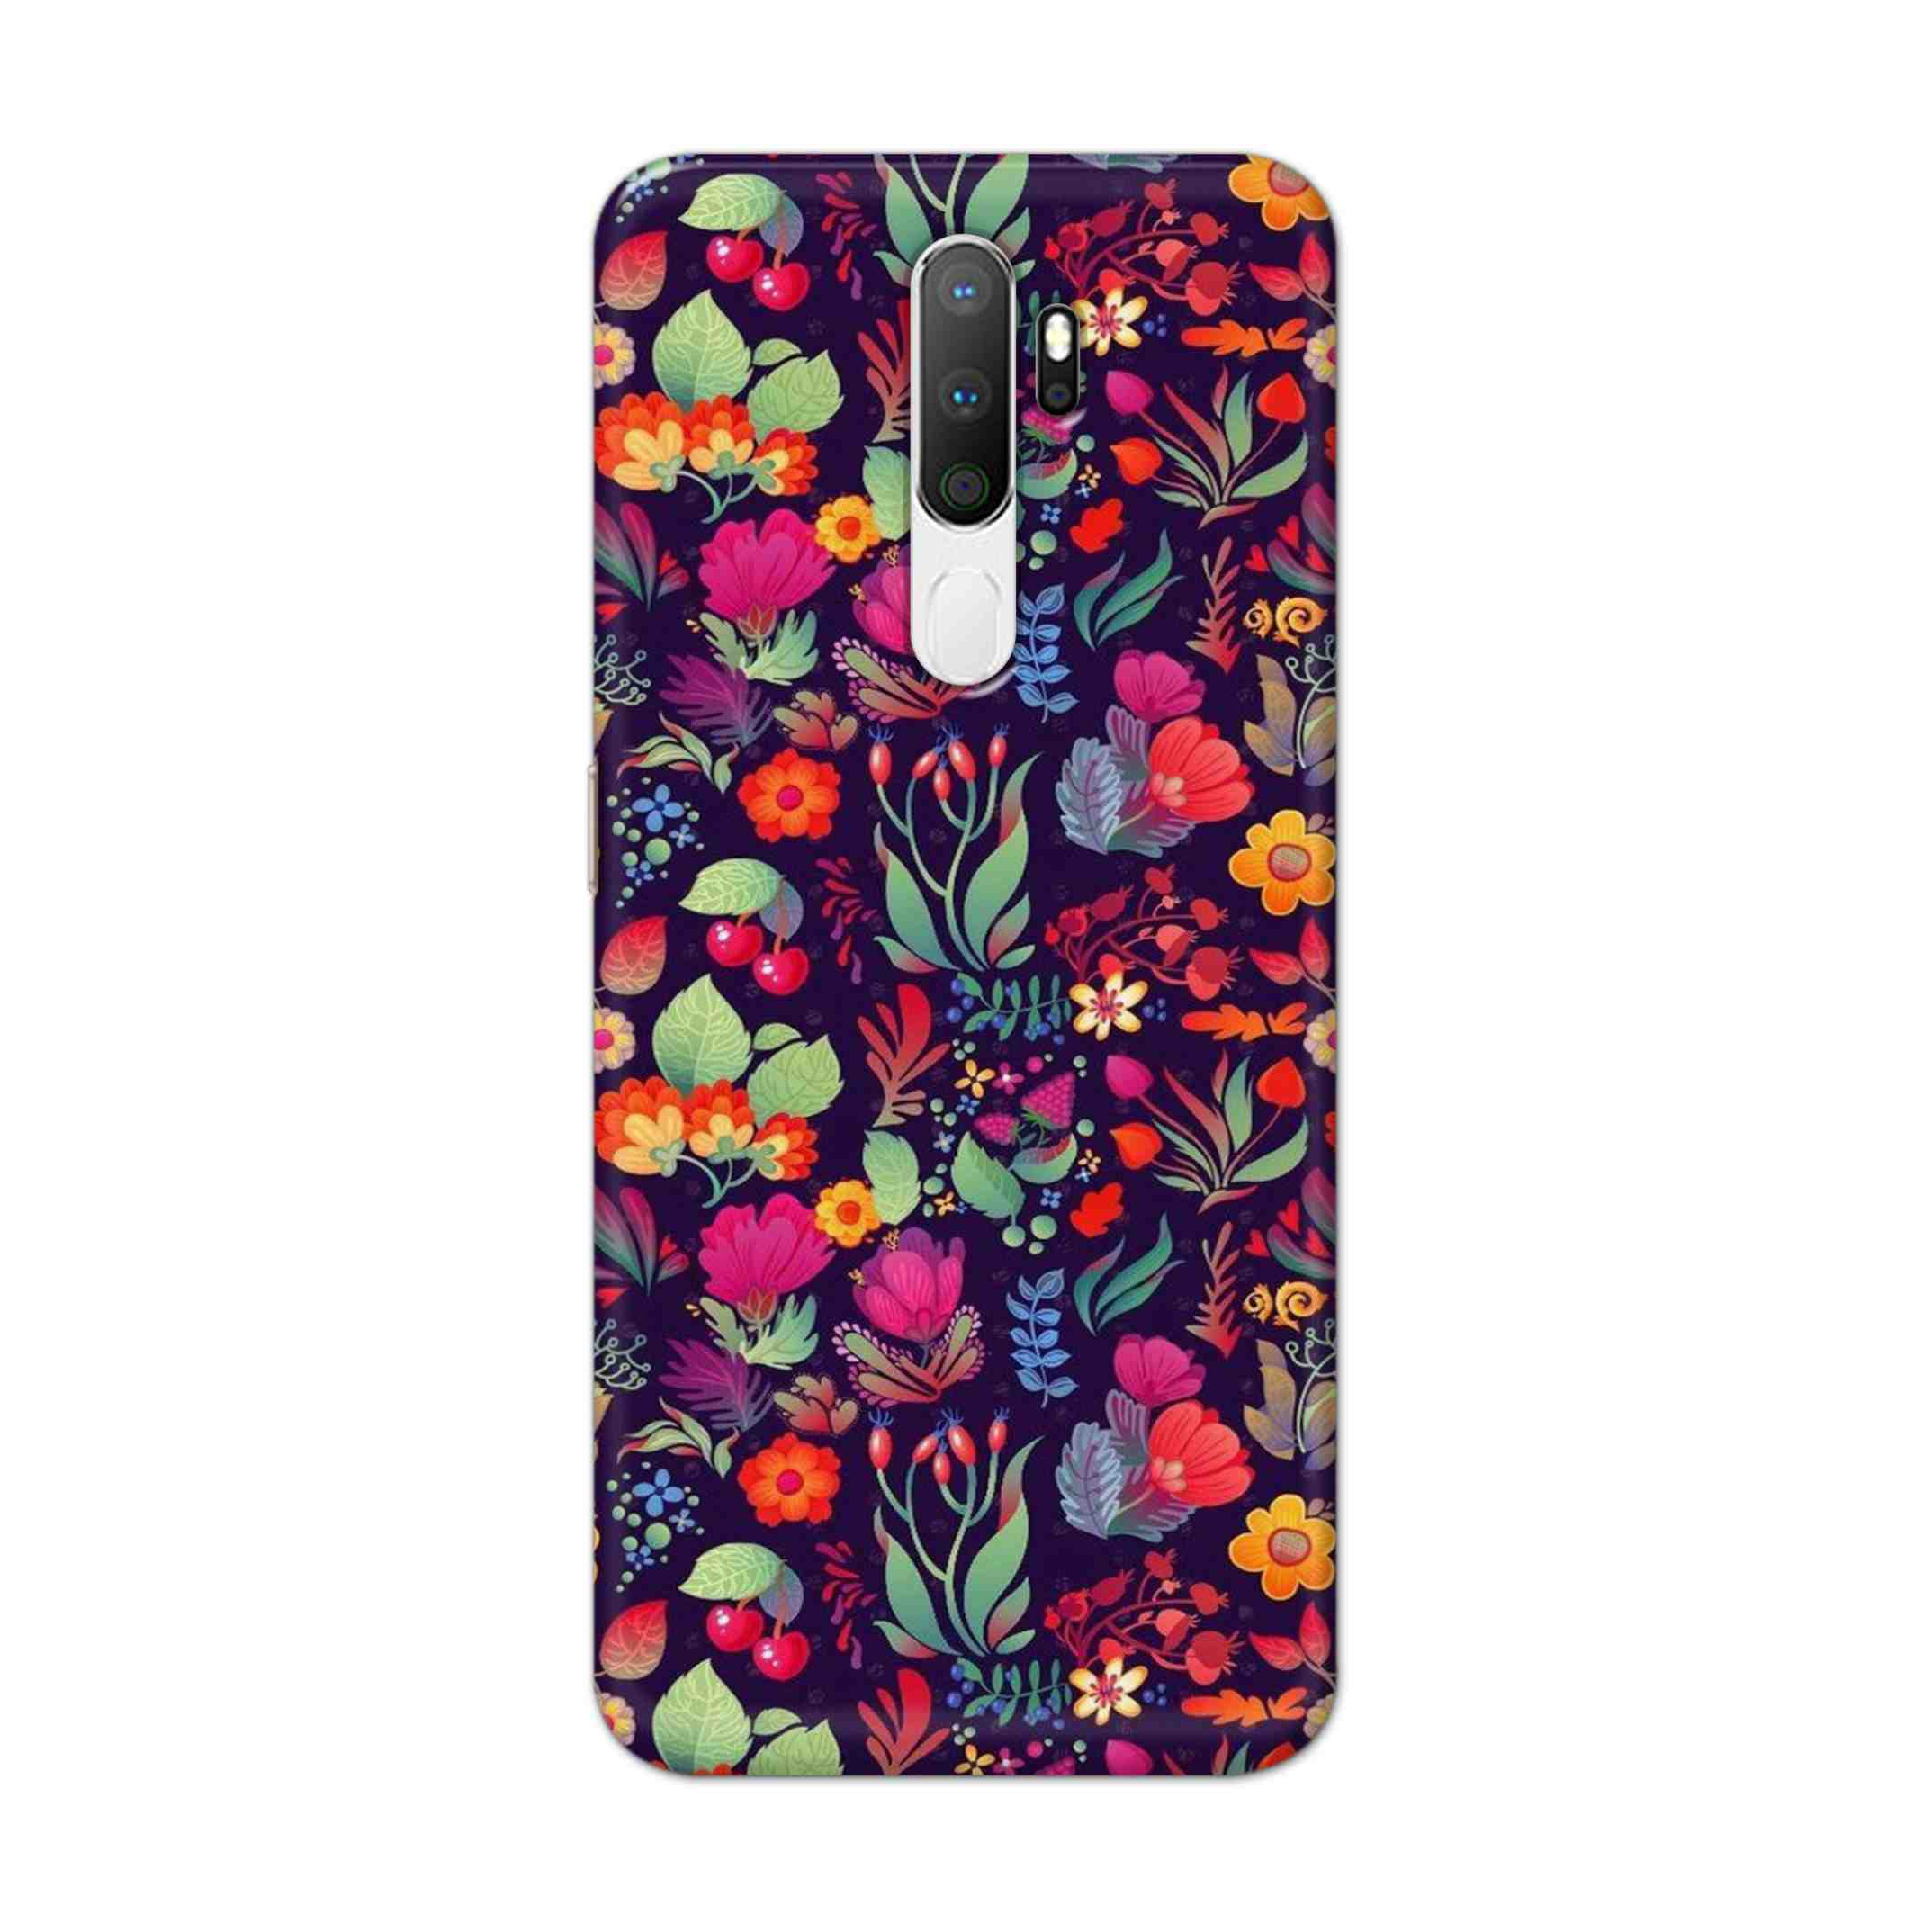 Buy Fruits Flower Hard Back Mobile Phone Case Cover For Oppo A5 (2020) Online